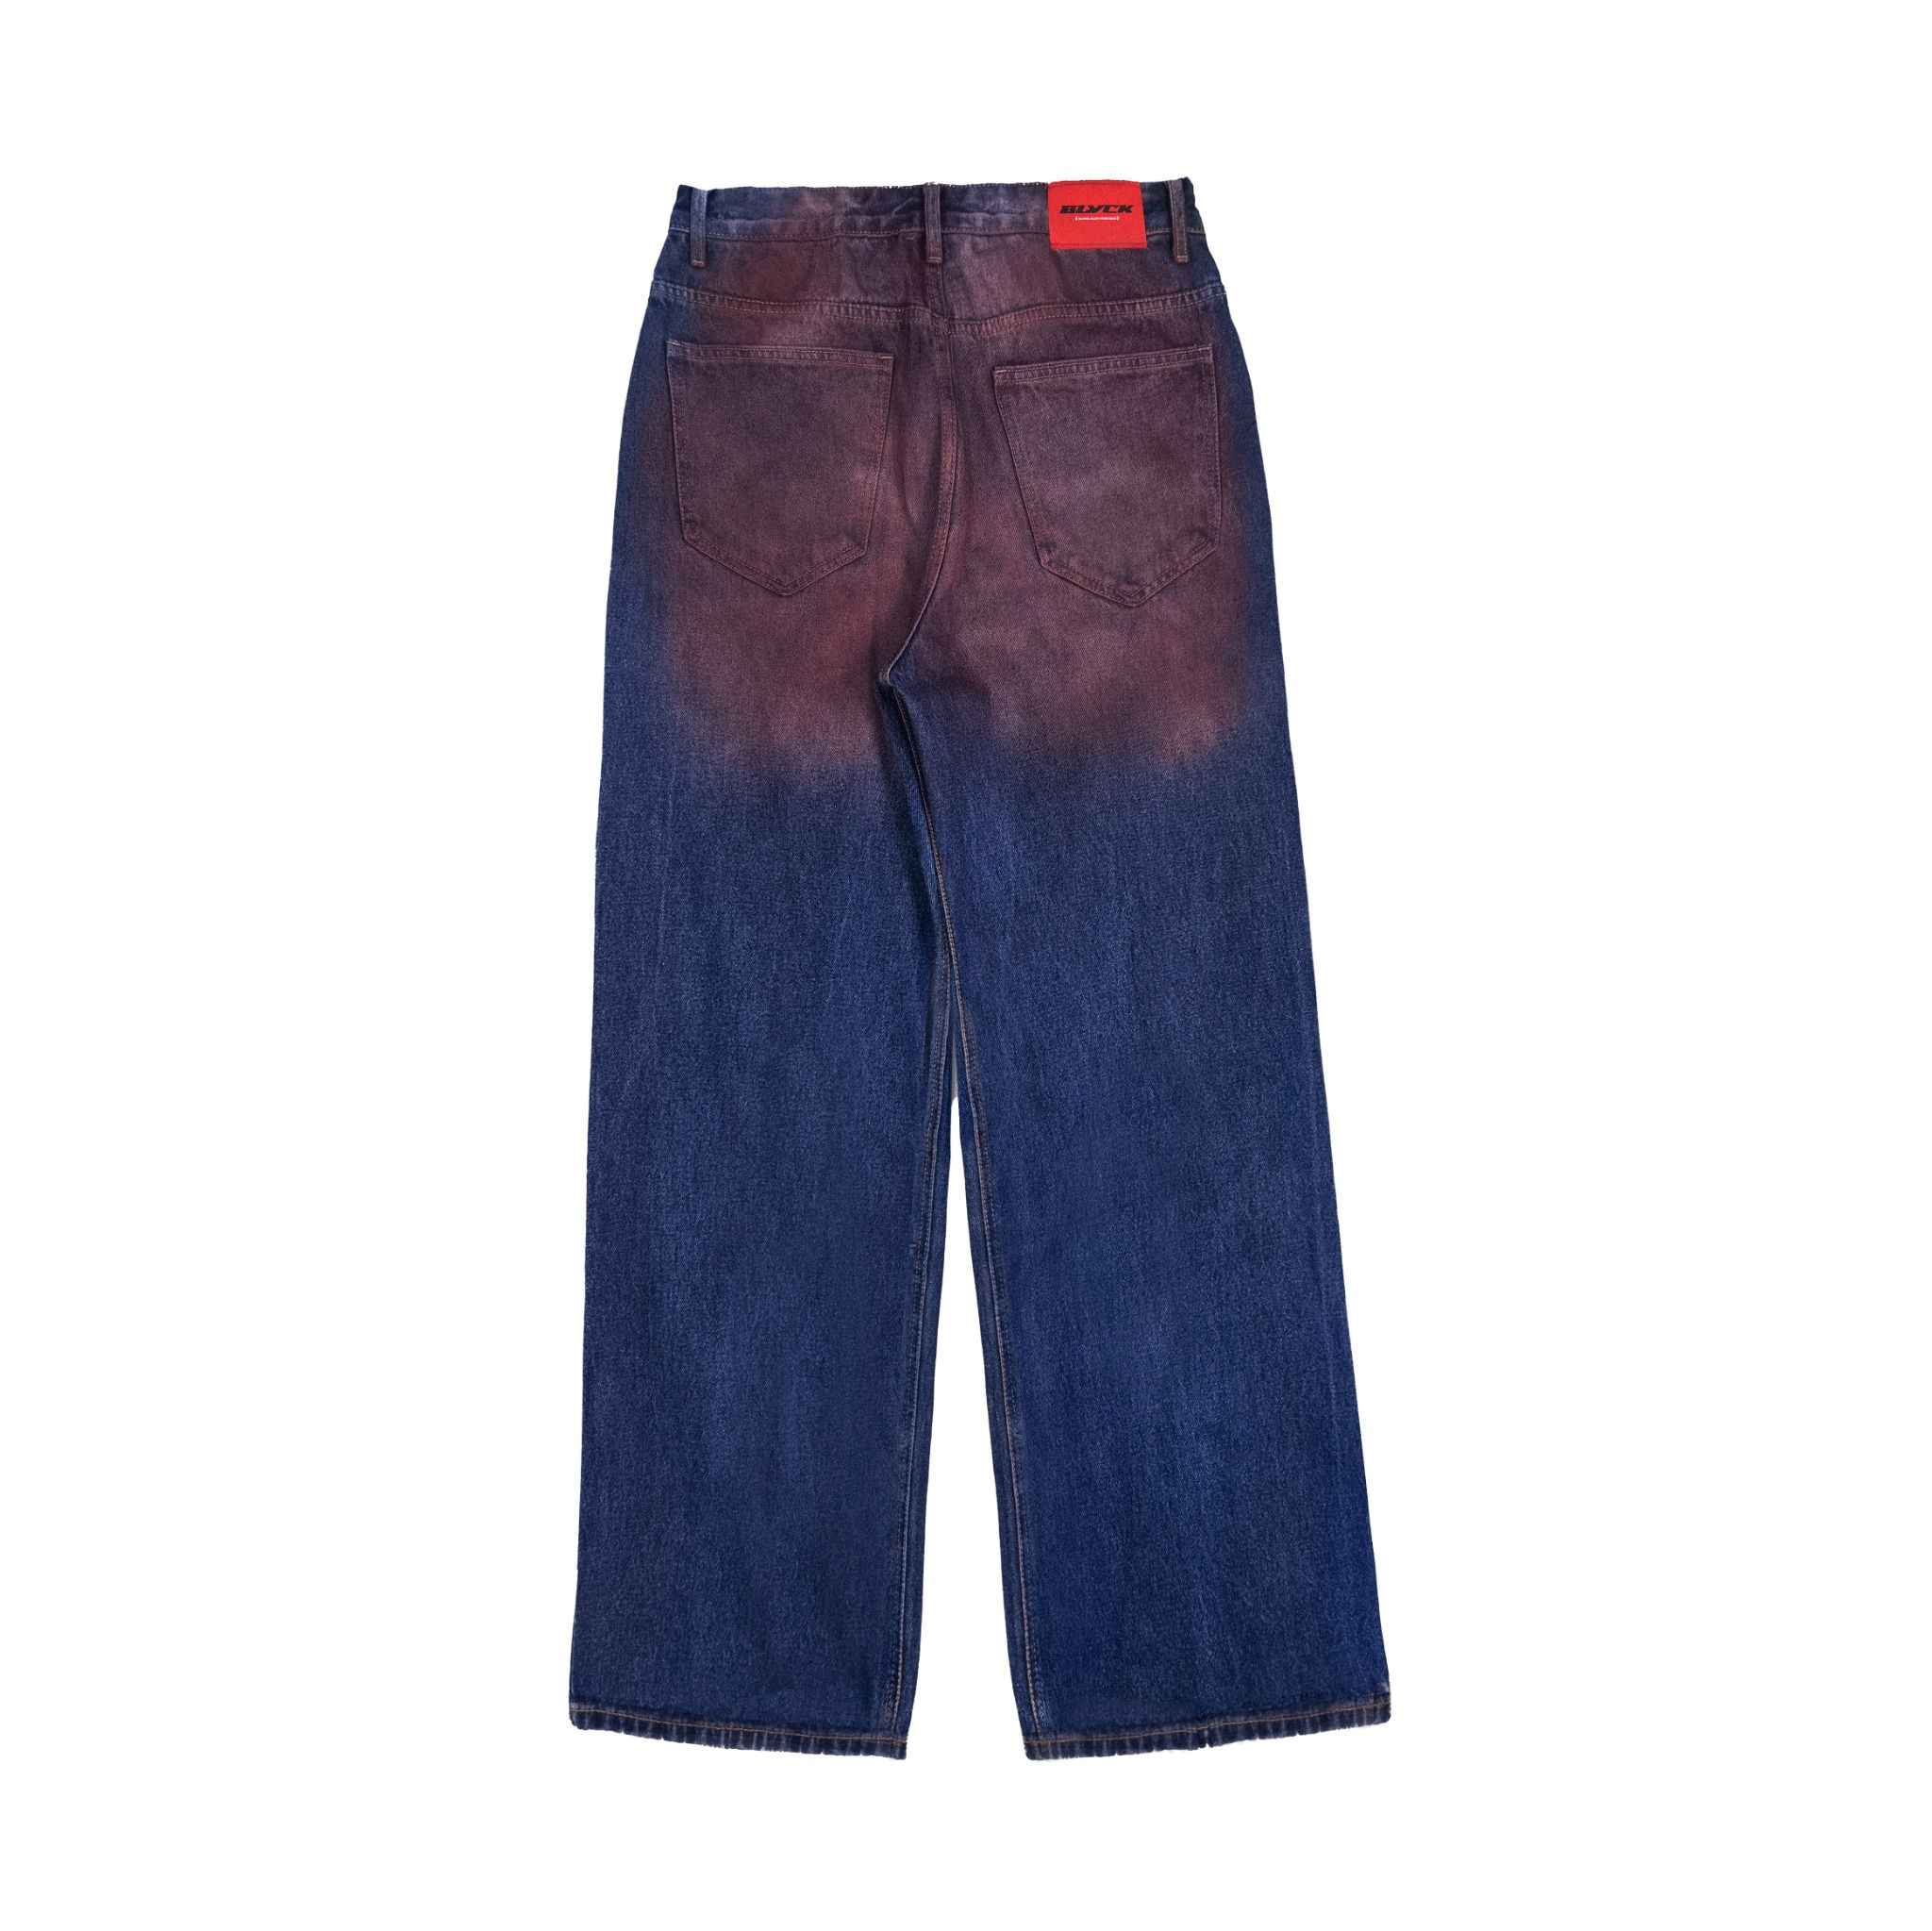  Cherry dyed - Jean pants 